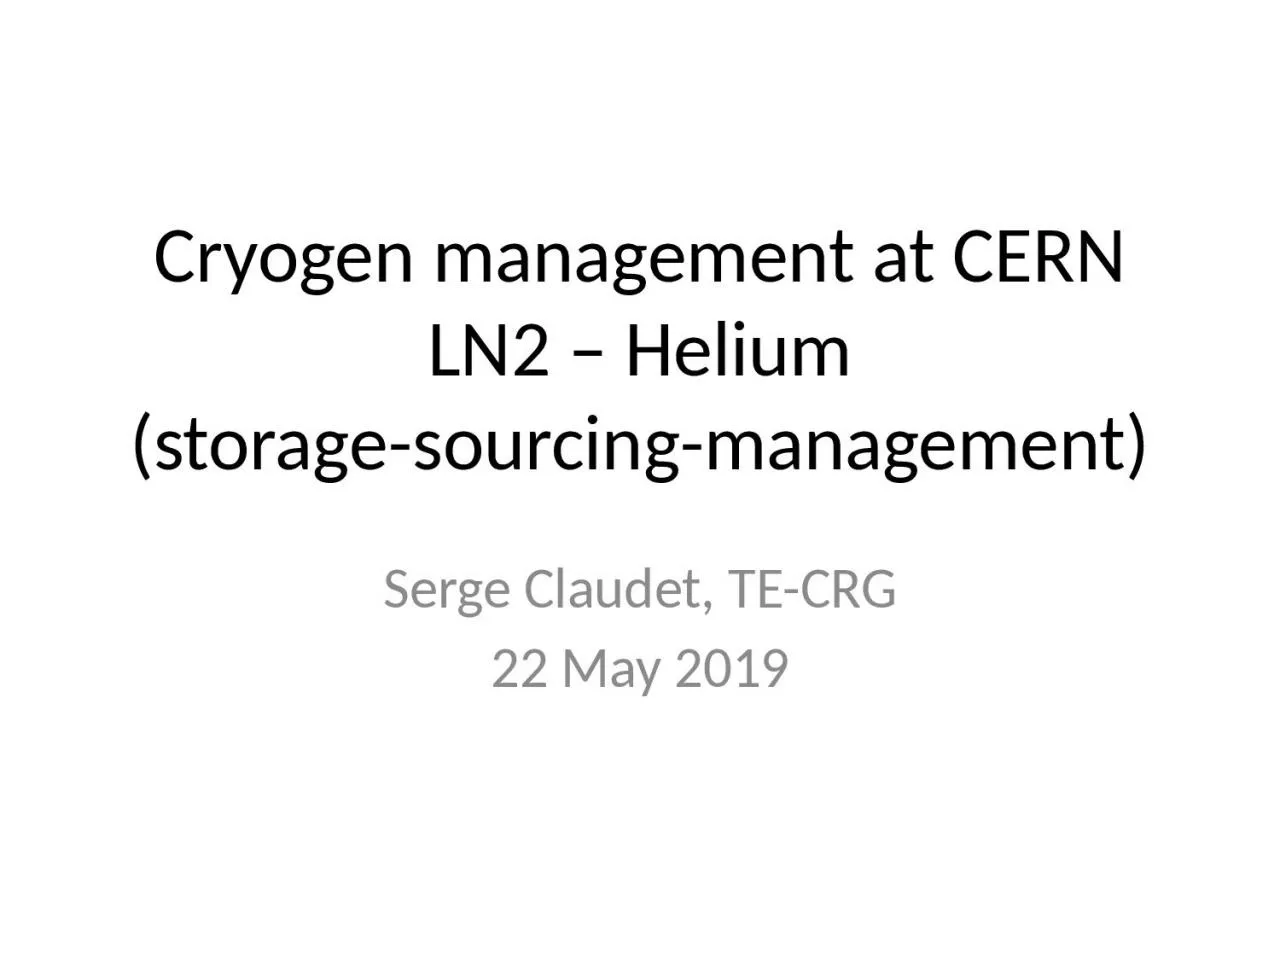 Cryogen management at CERN